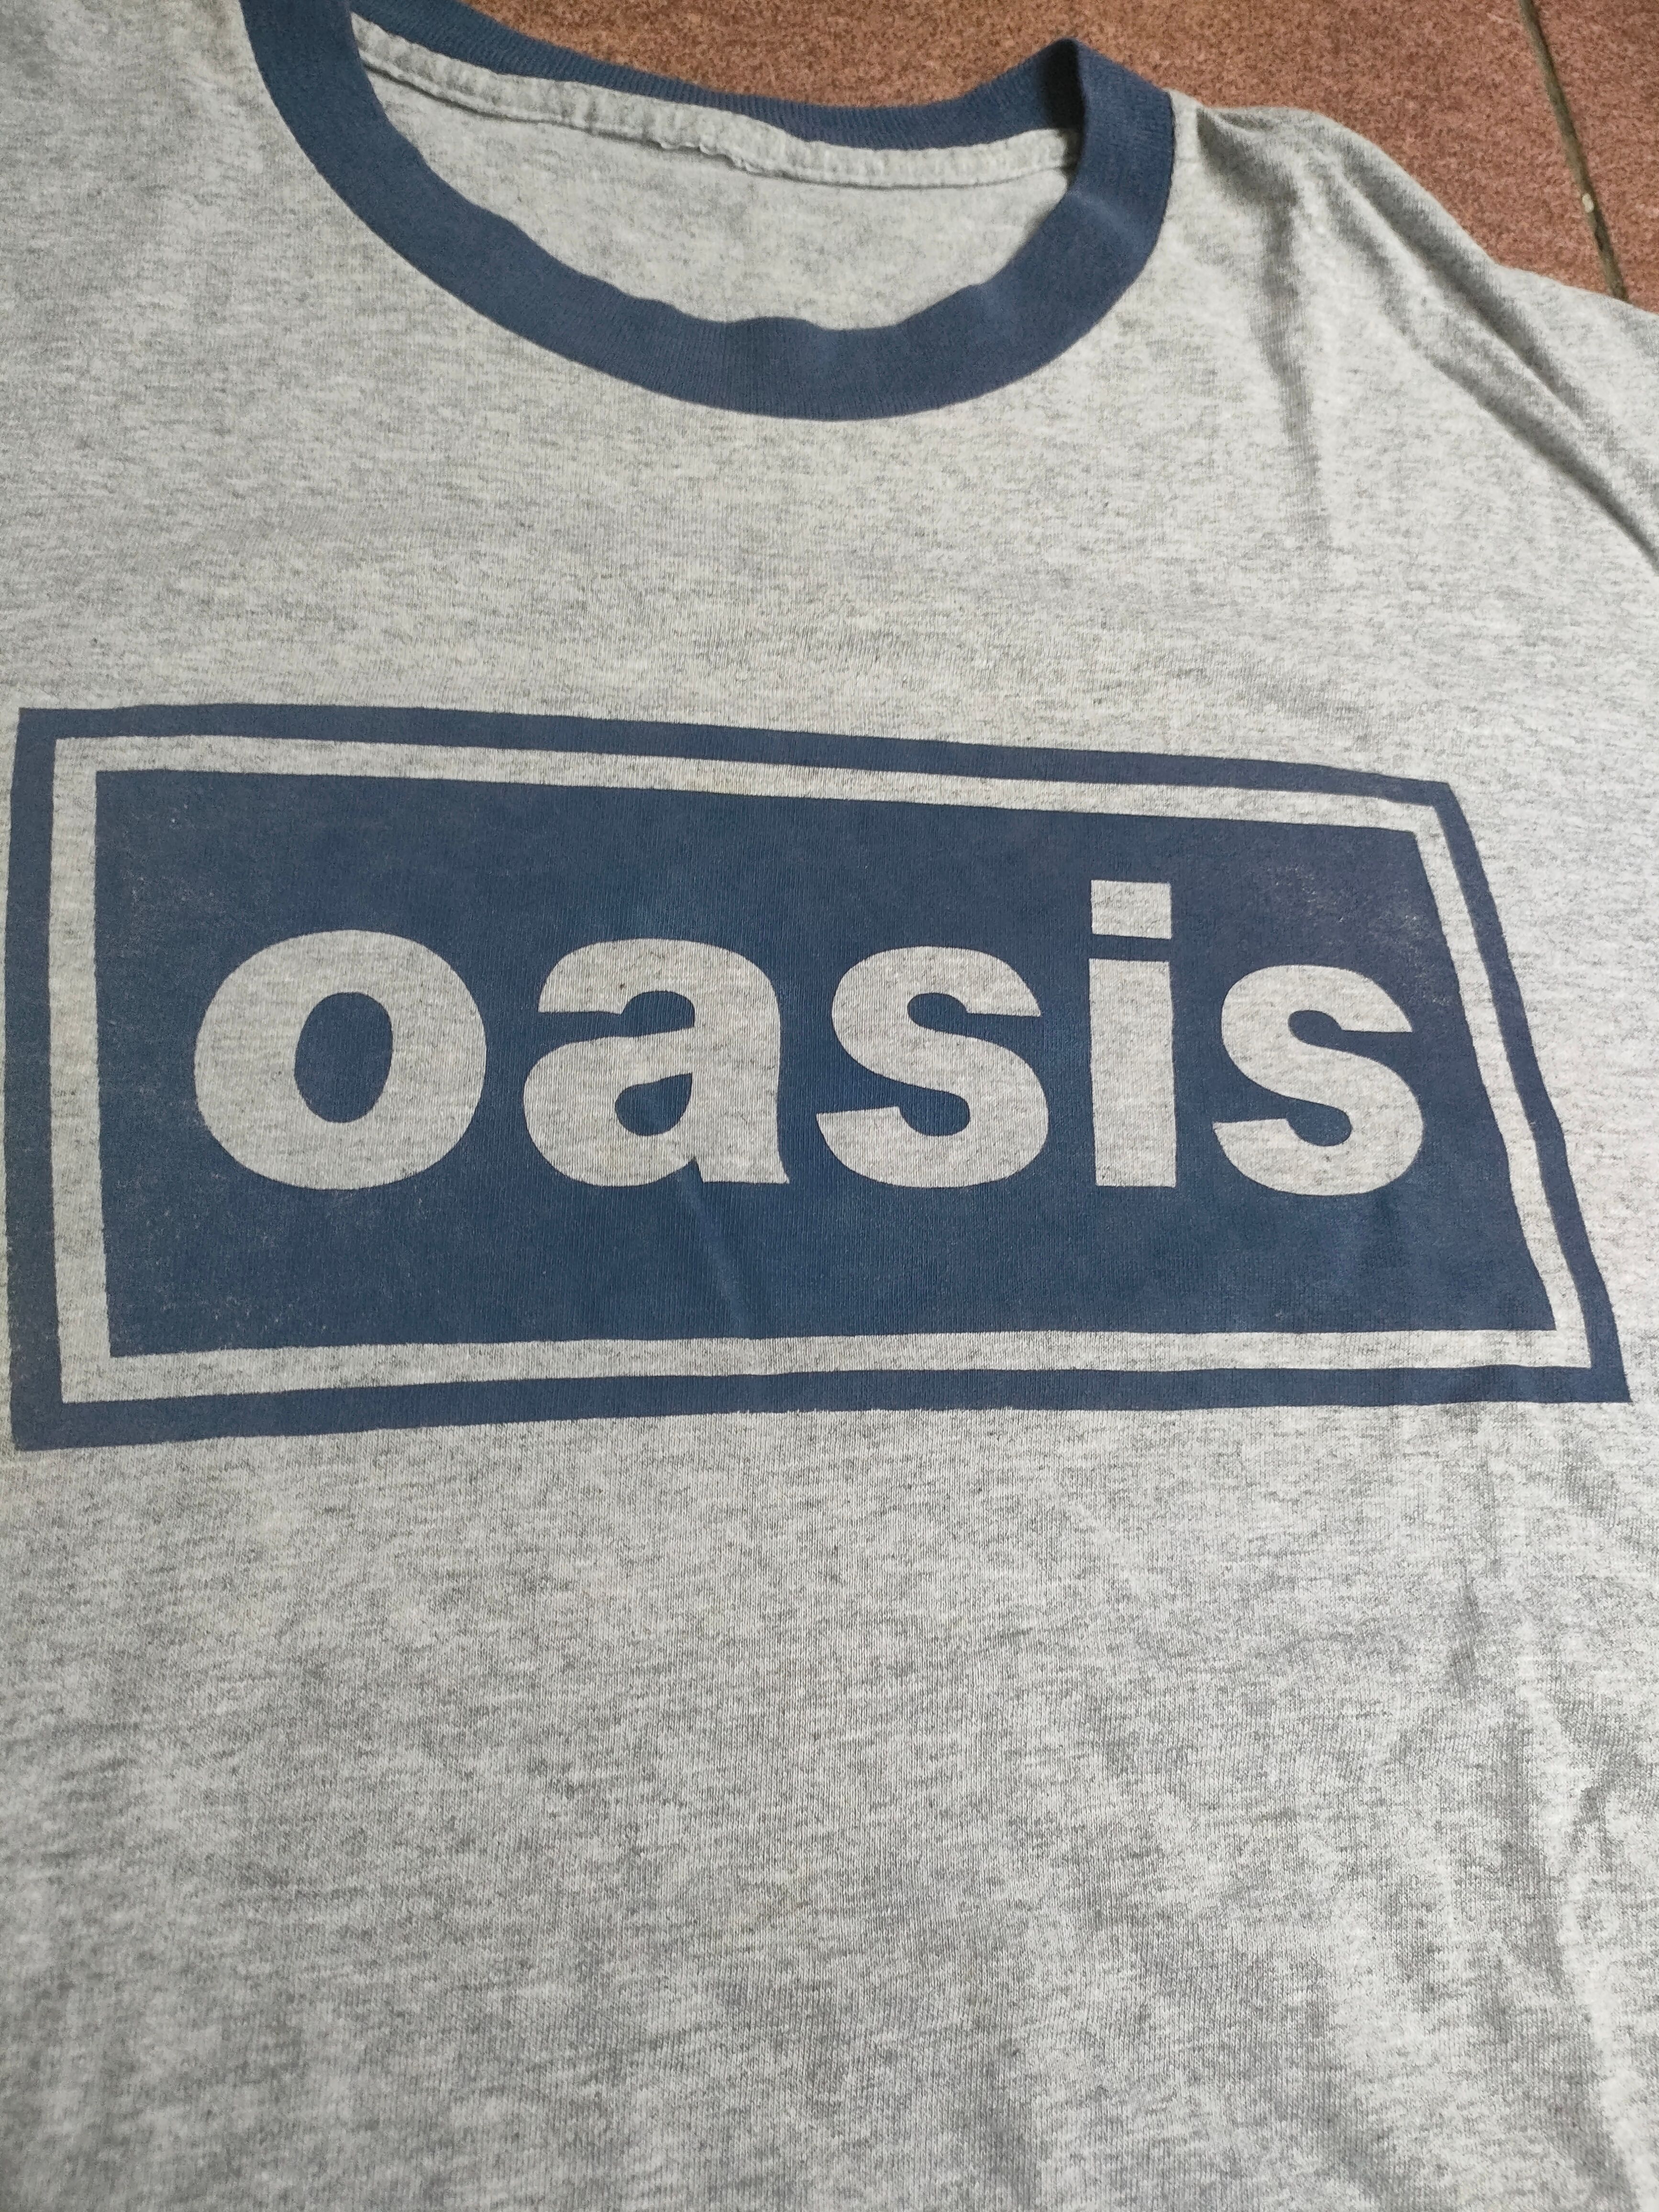 Vintage Oasis Band Tshirt - Ringer Tees - 3